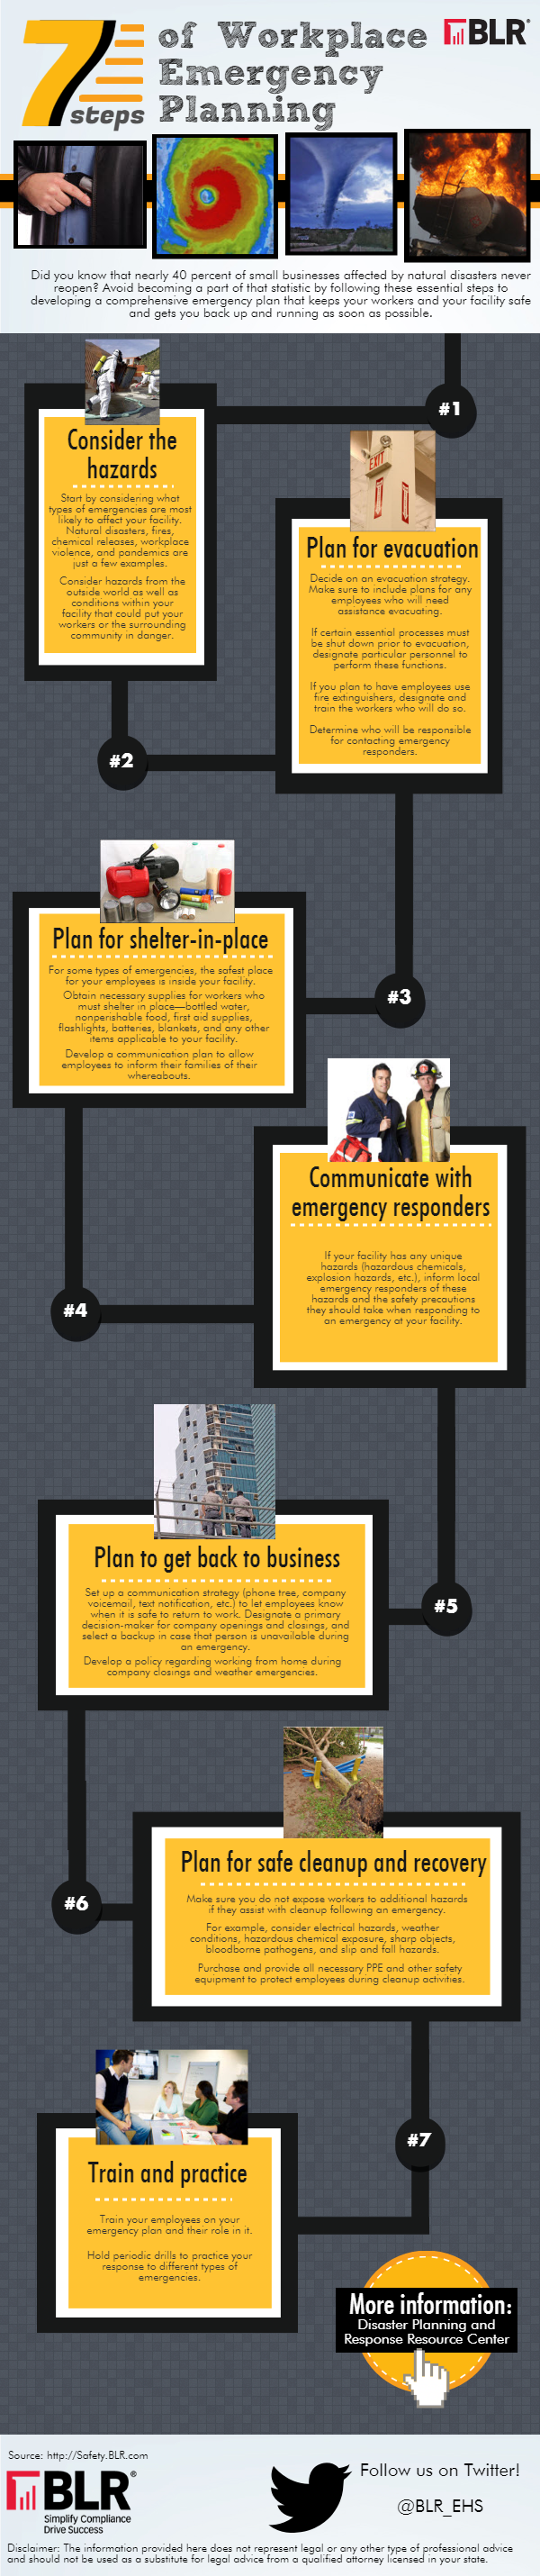 7 Steps of Workplace Emergency Planning - Atlantictraining.com